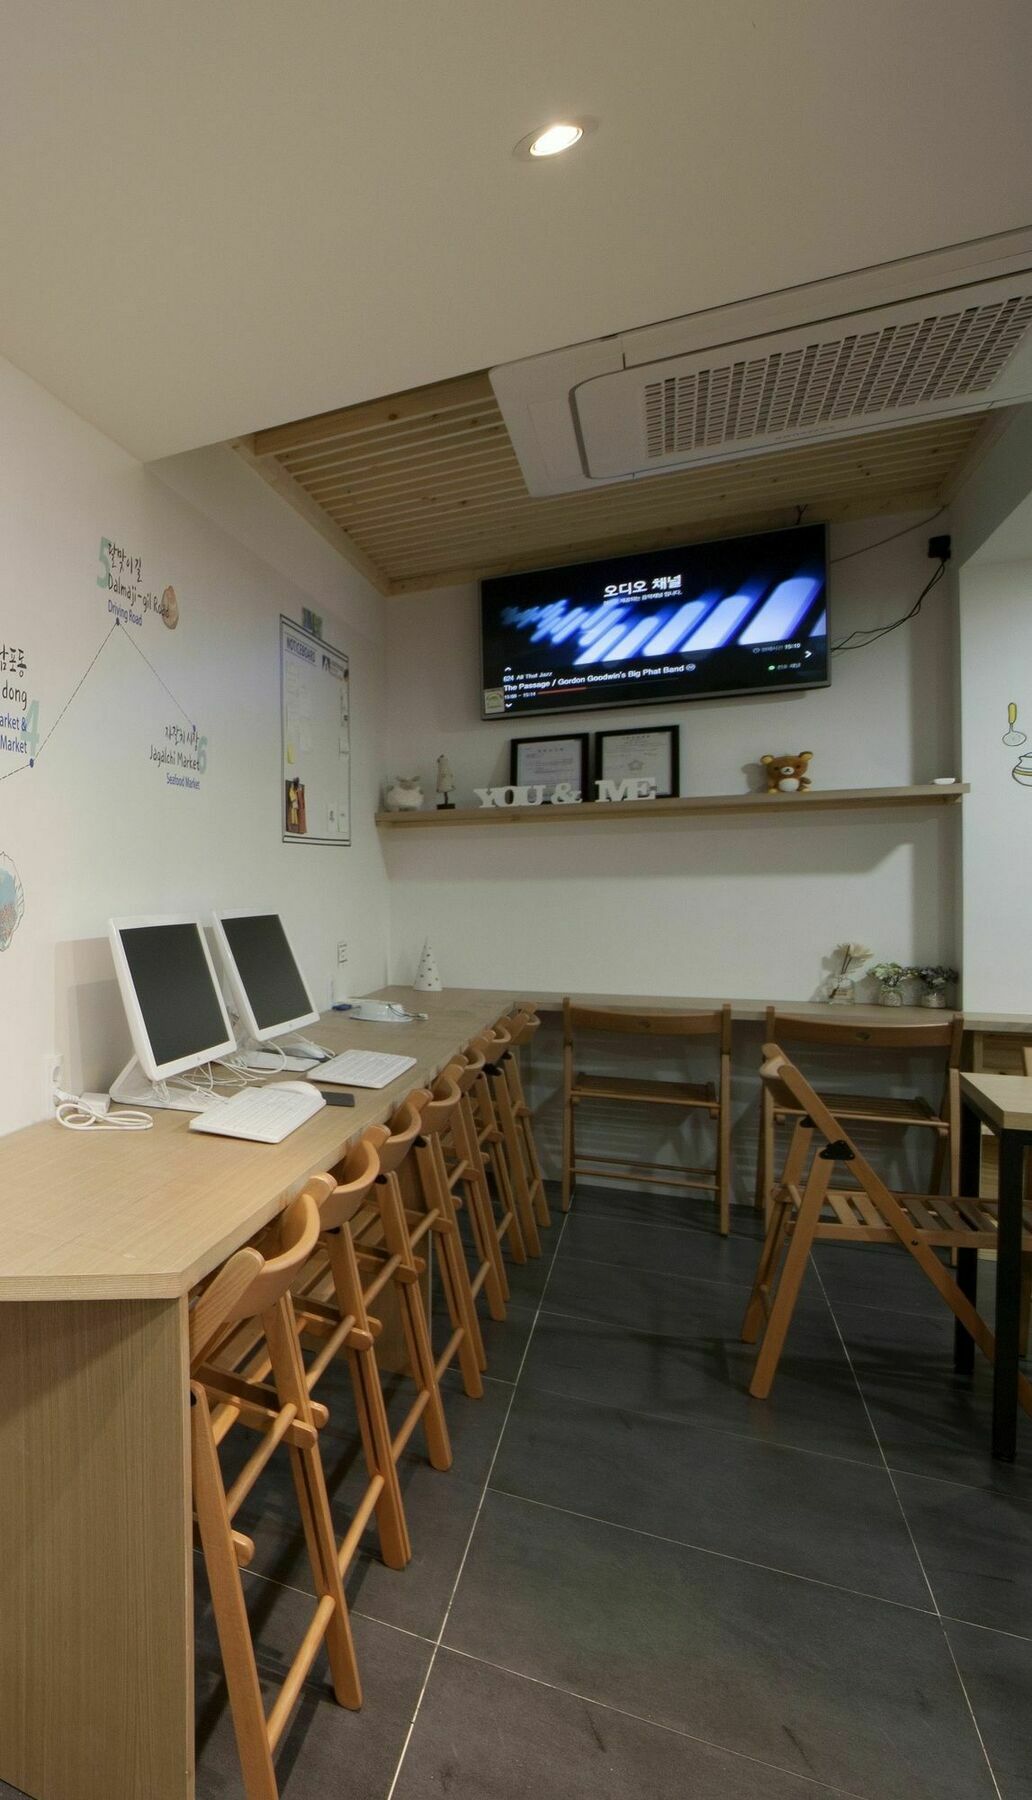 K-Guesthouse Premium Busan 1 Exterior foto